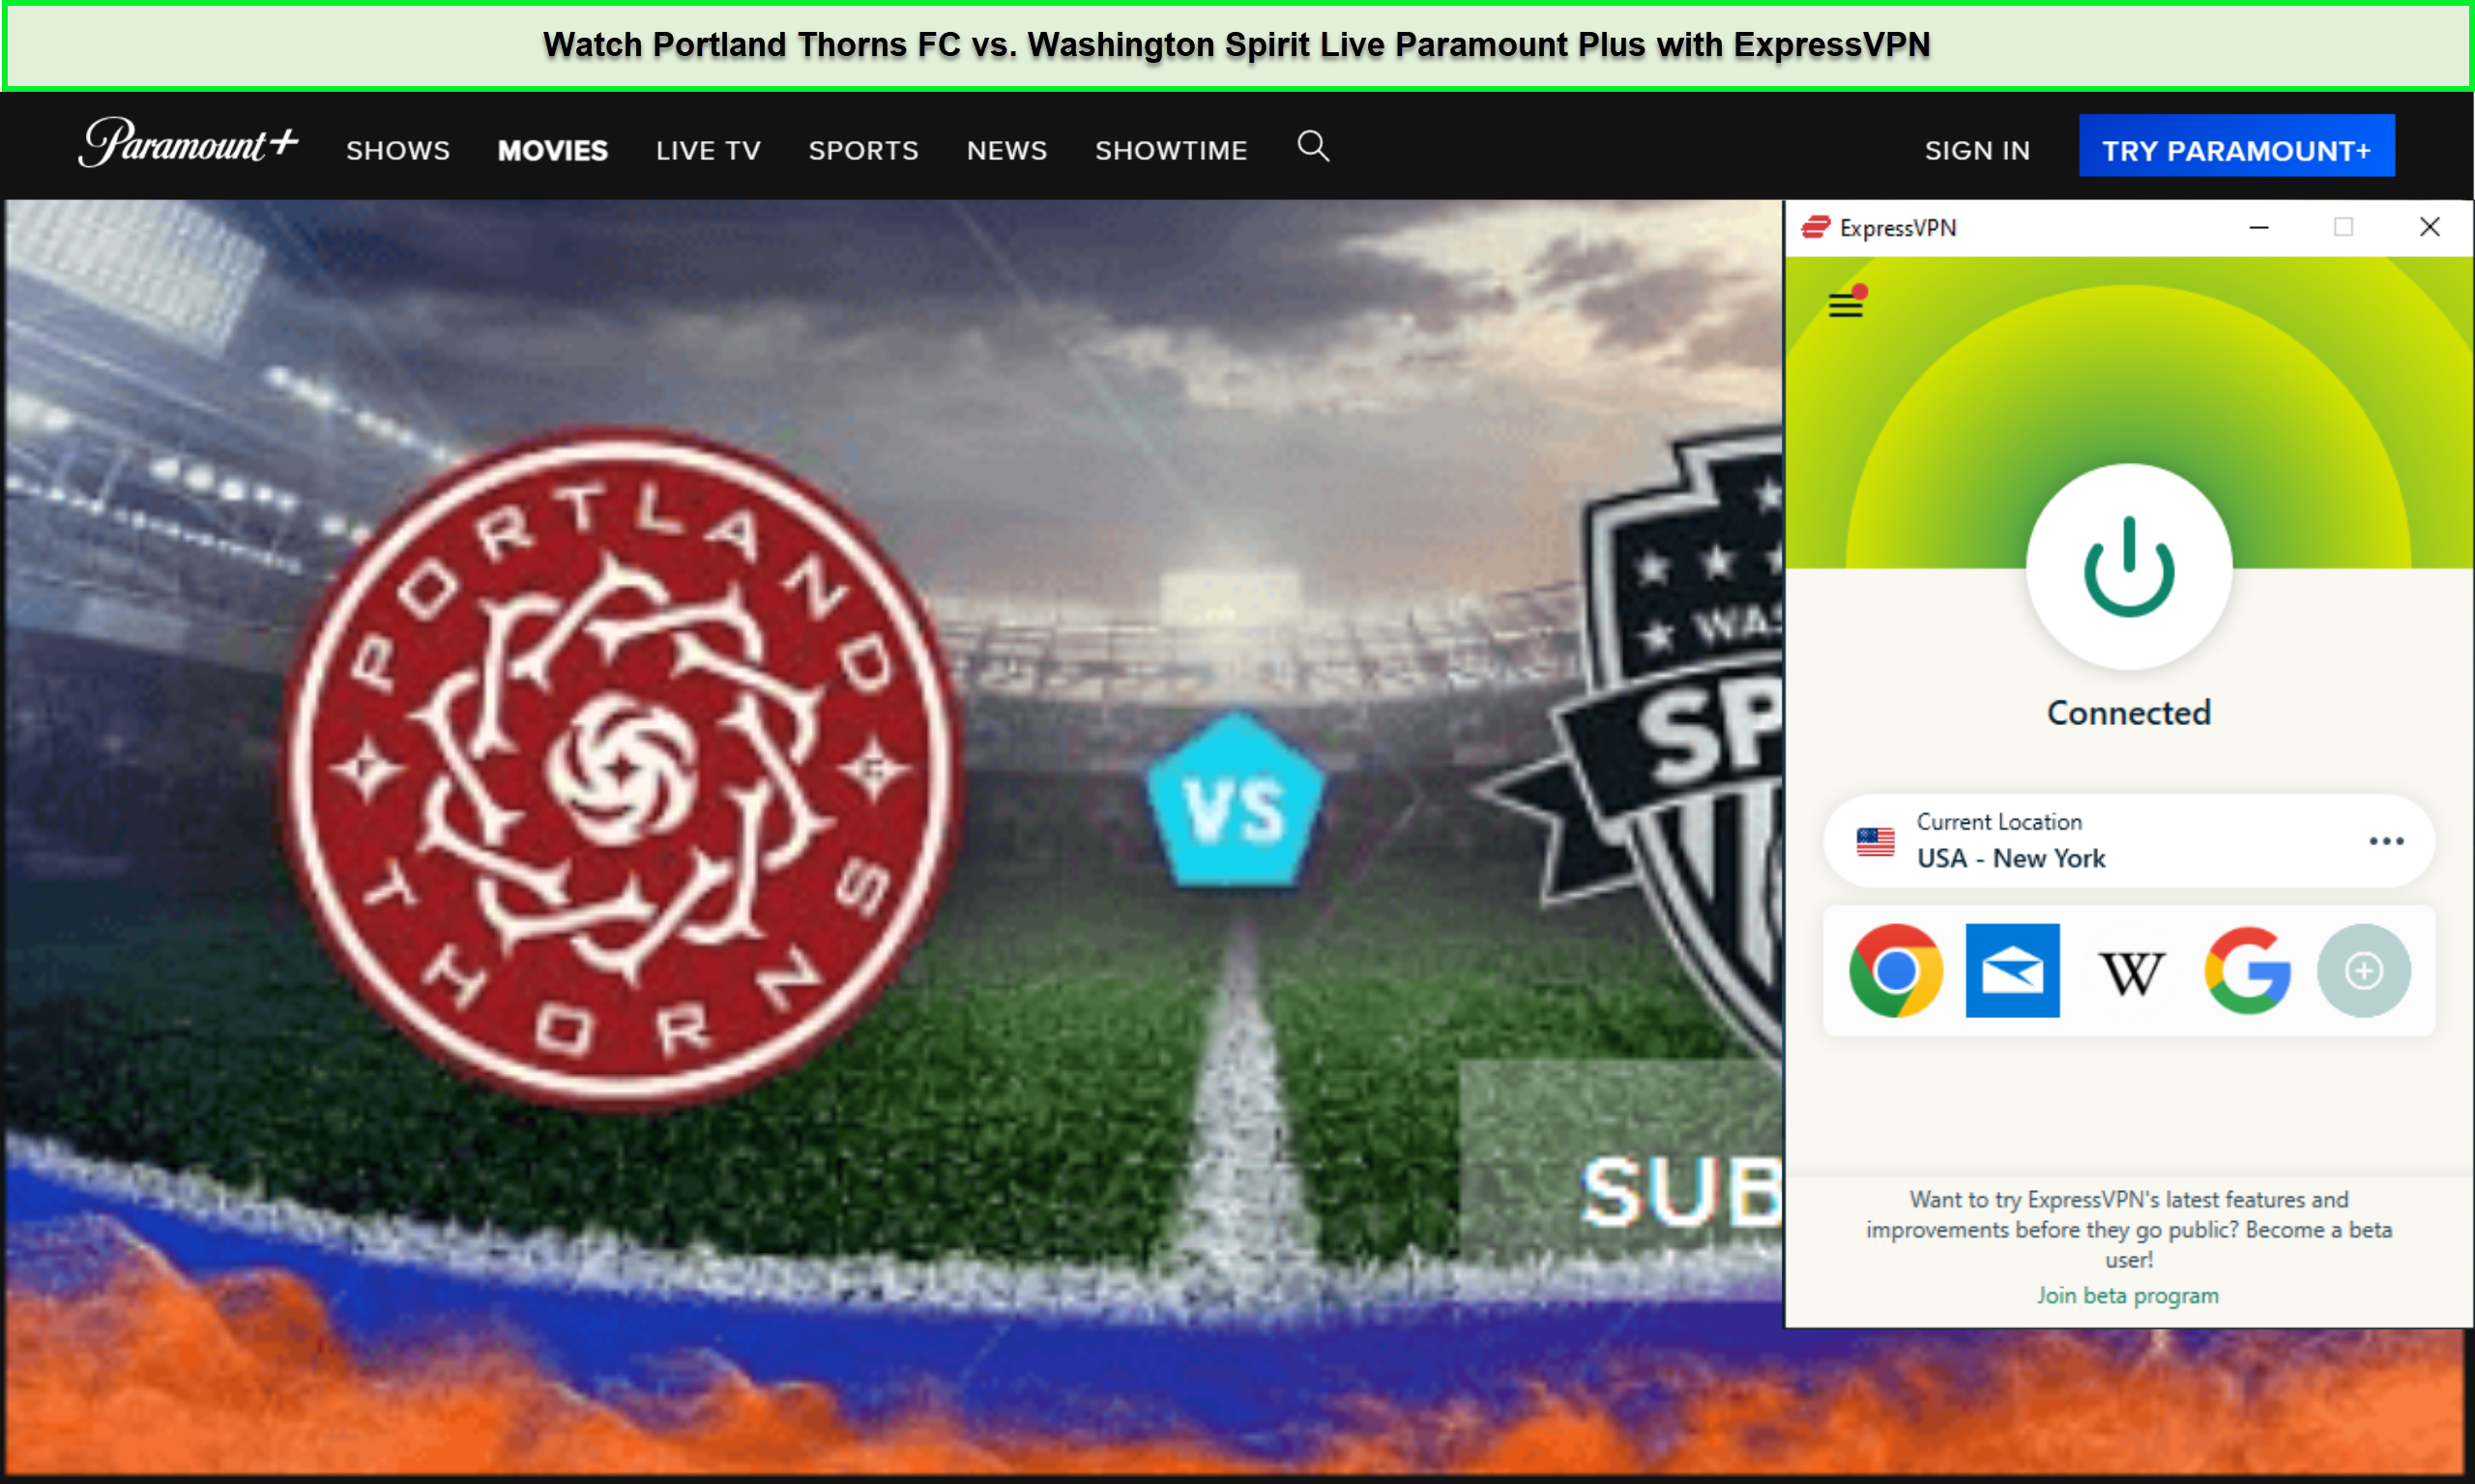 Watch-Portland-Thorns-FC-vs-Washington-Spirit-Live-in-Canada-Paramount-Plus-with-ExpressVPN